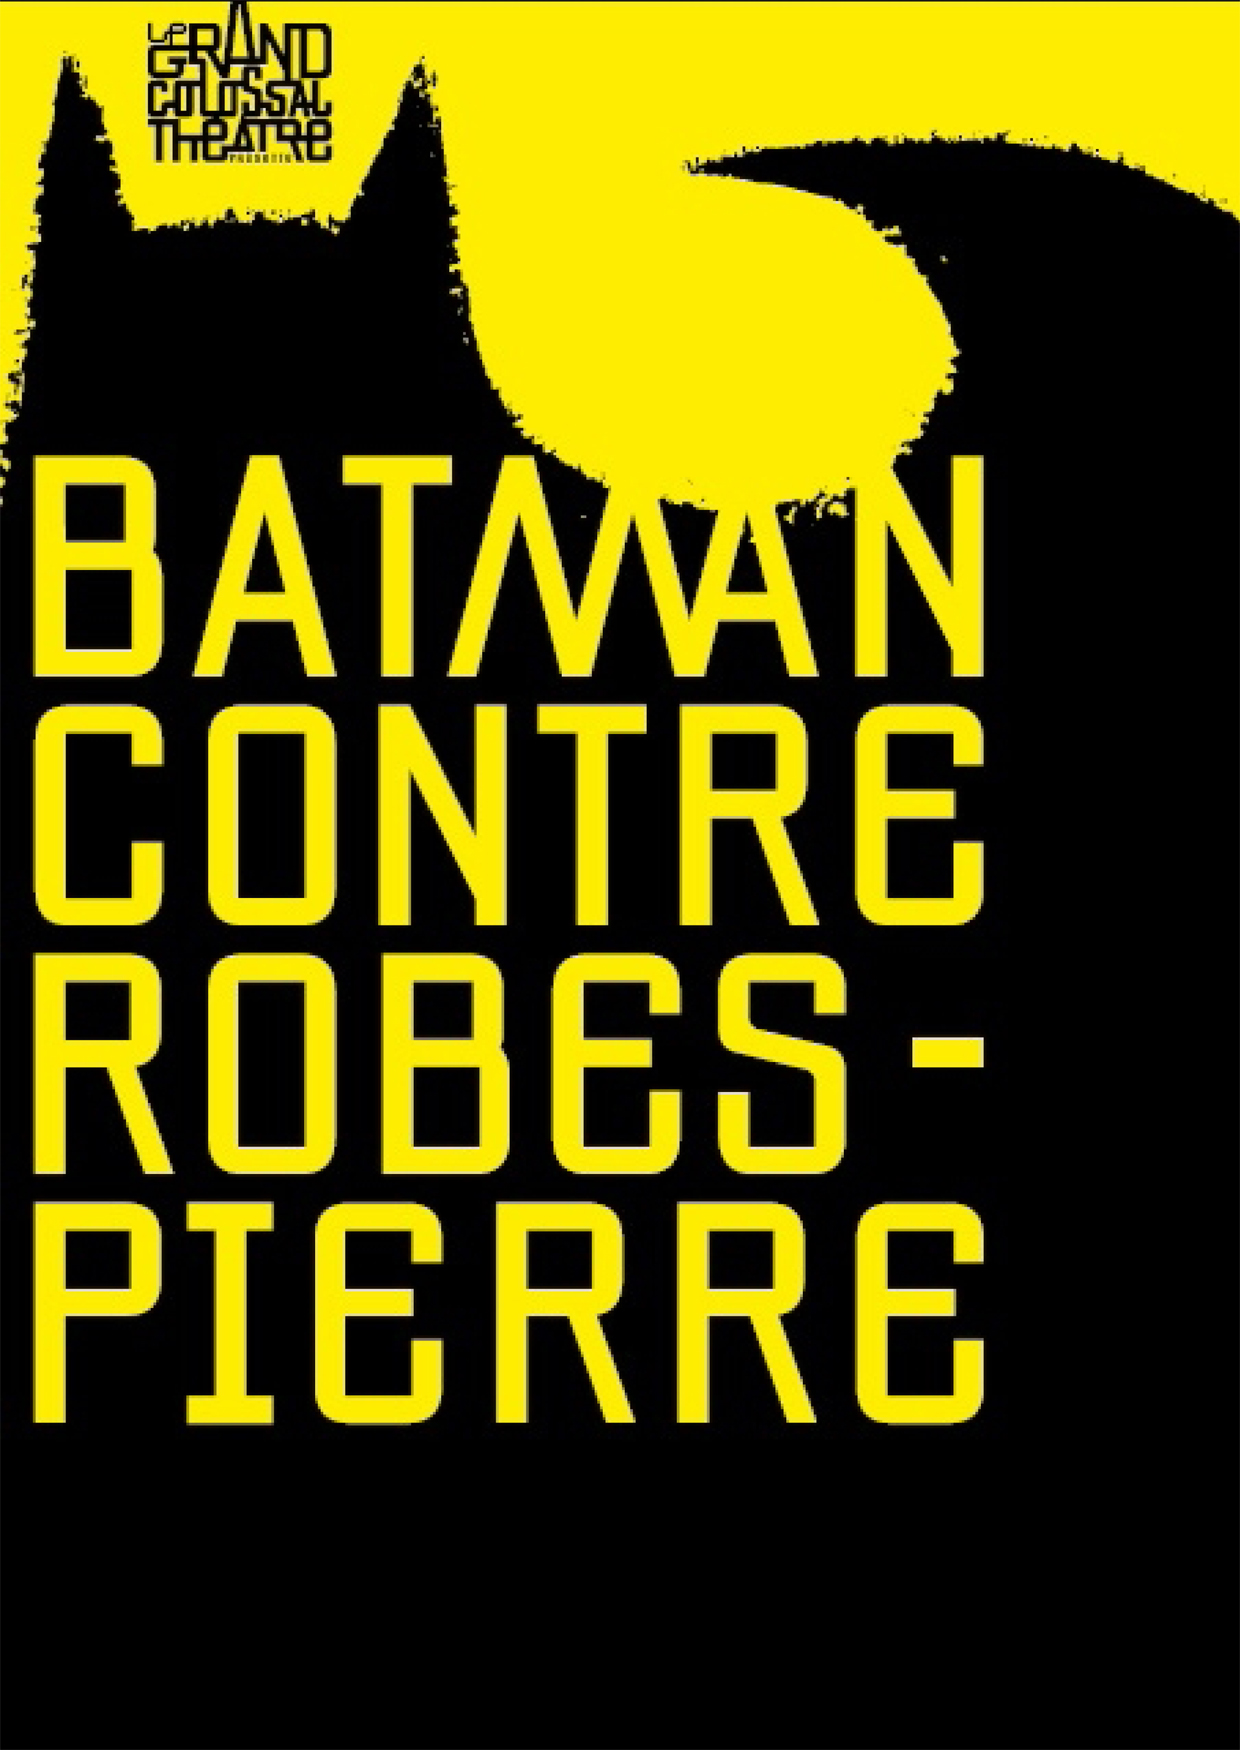 Batman Vs. Robespierre